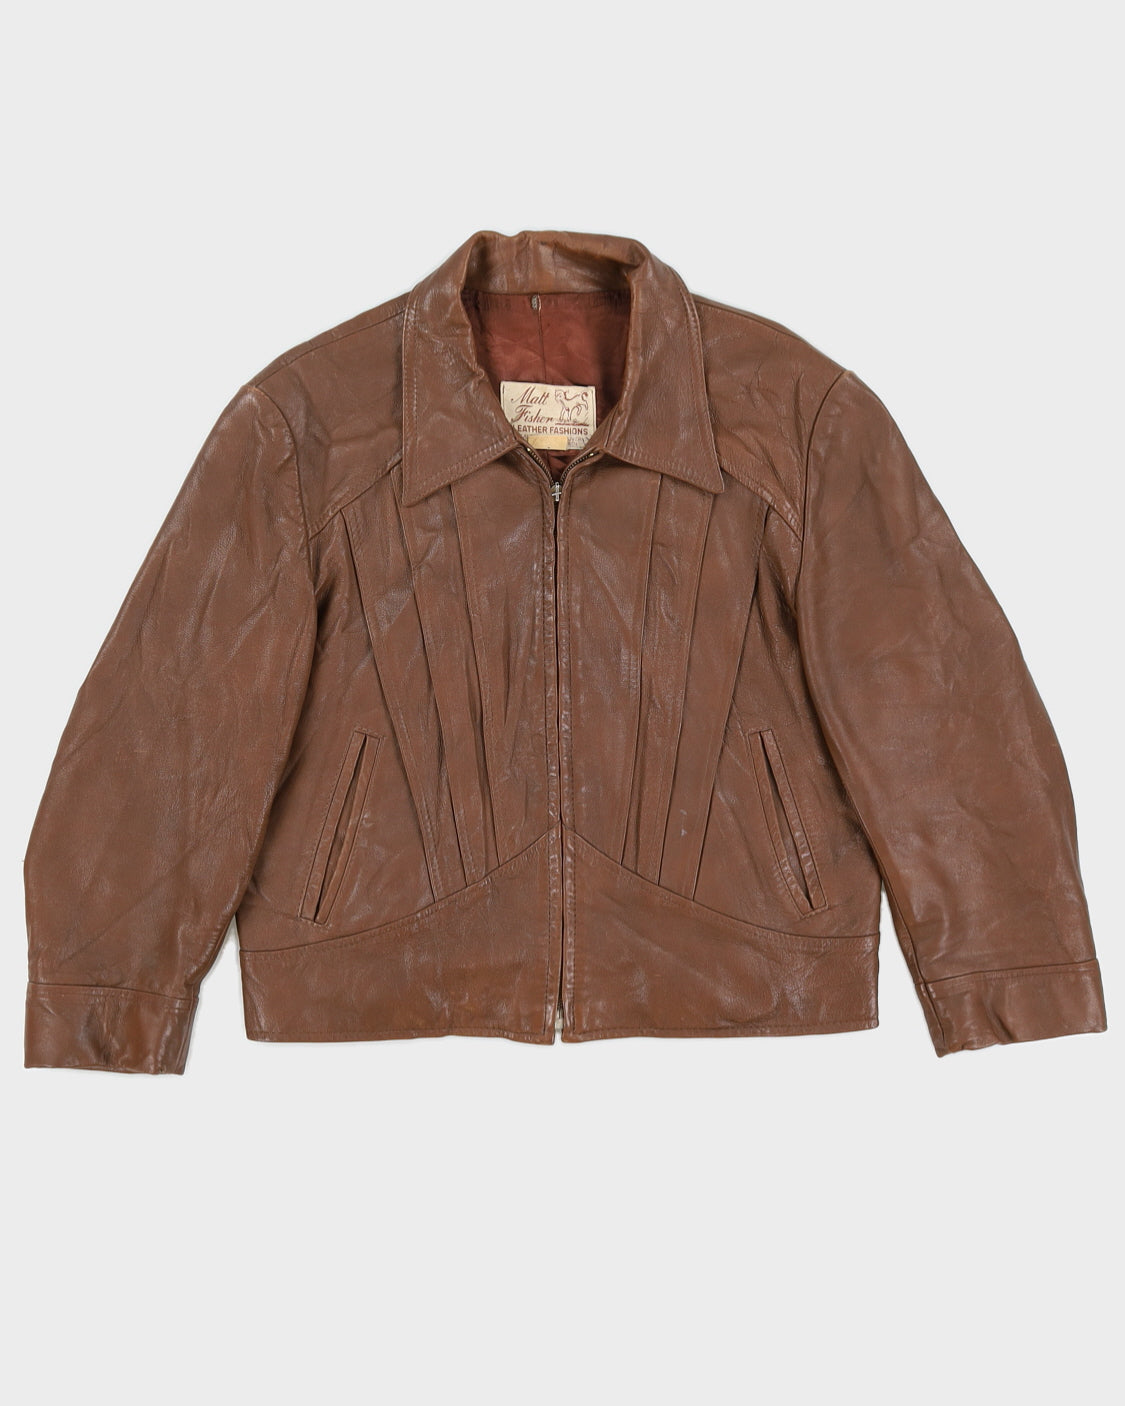 Vintage 60s Matt Fisher Brown Leather Jacket - M/L